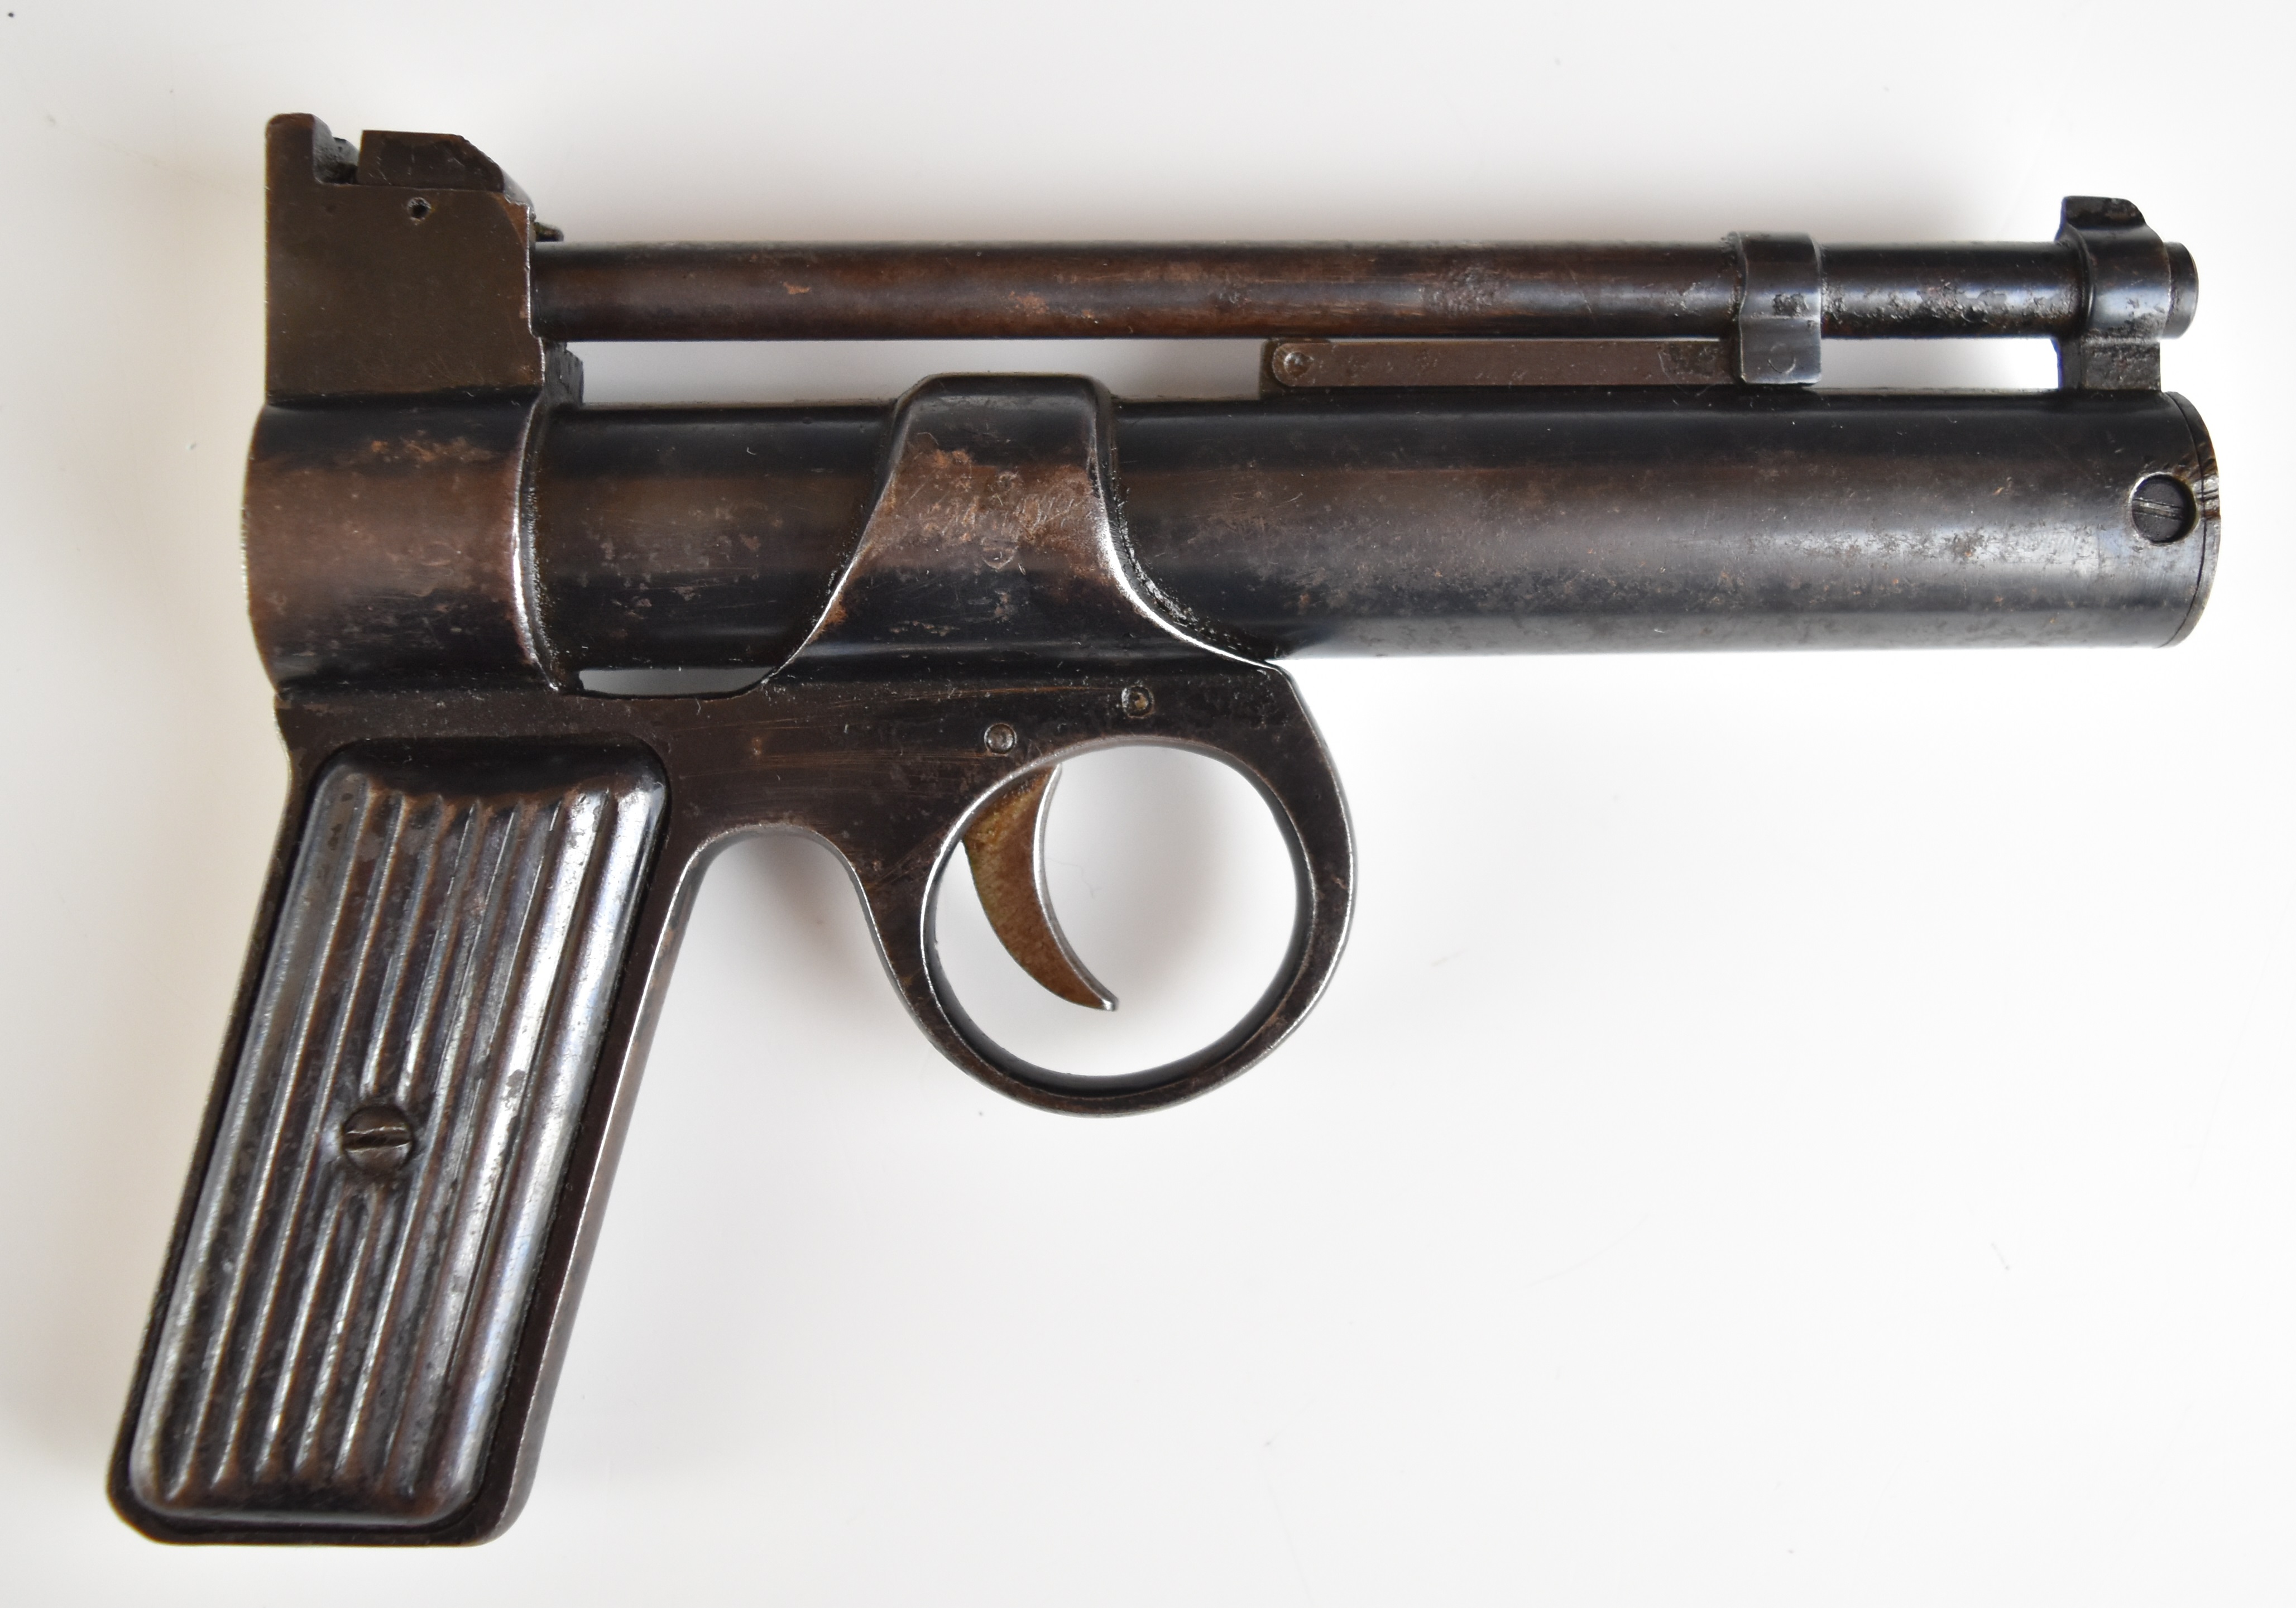 Webley Junior .177 air pistol with reeded metal grips and adjustable sights, serial number J34104.